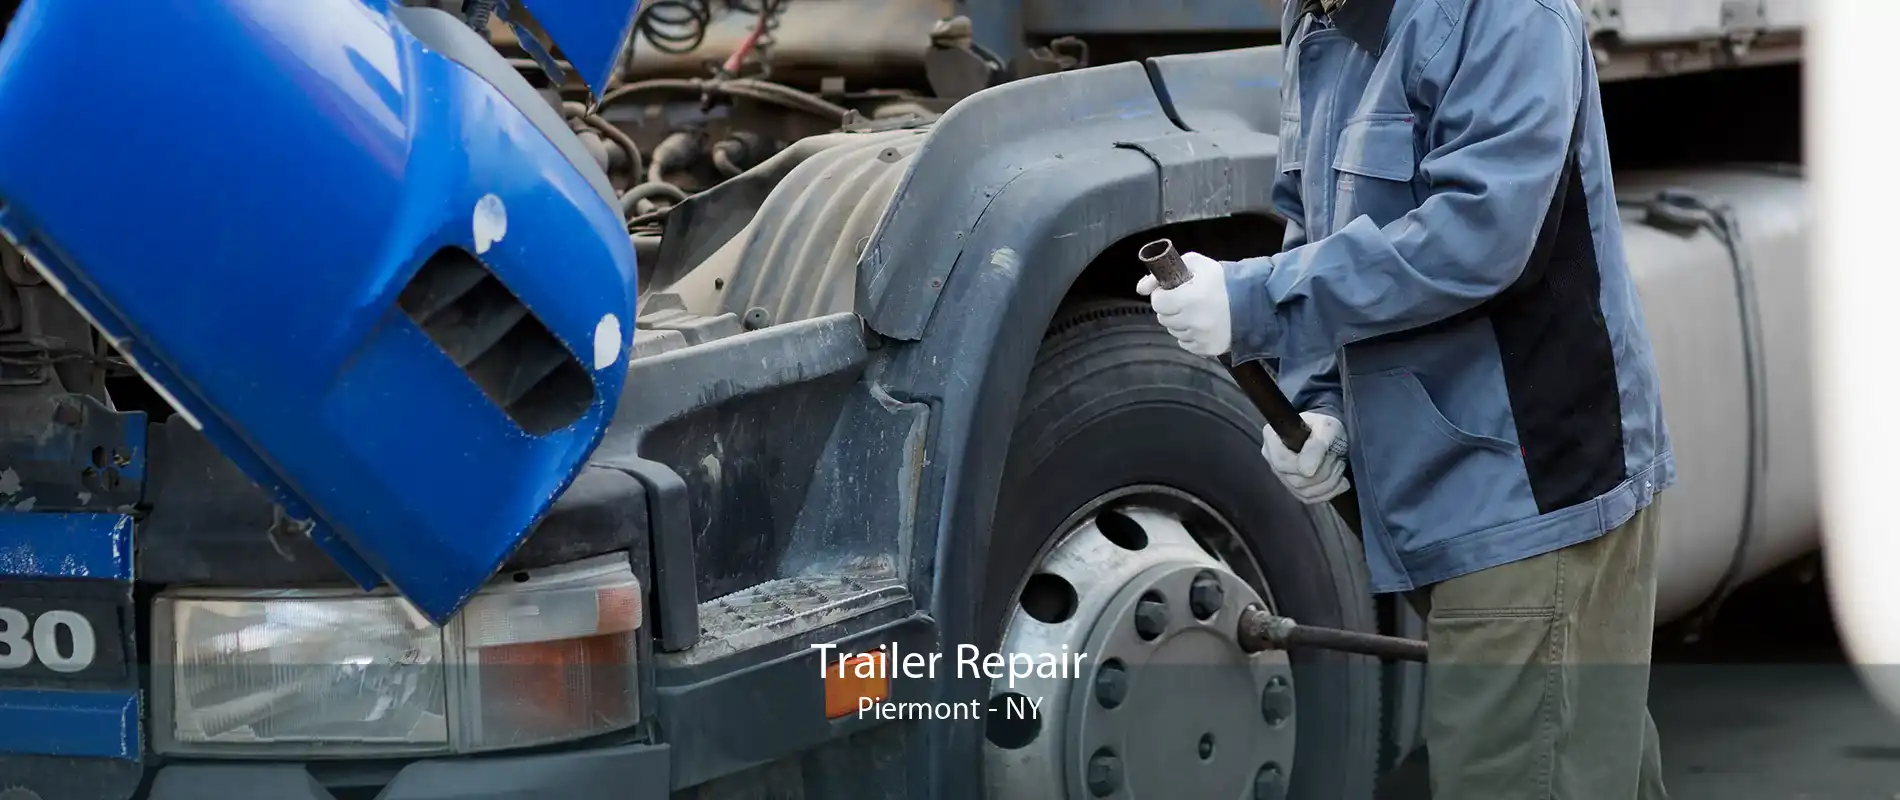 Trailer Repair Piermont - NY